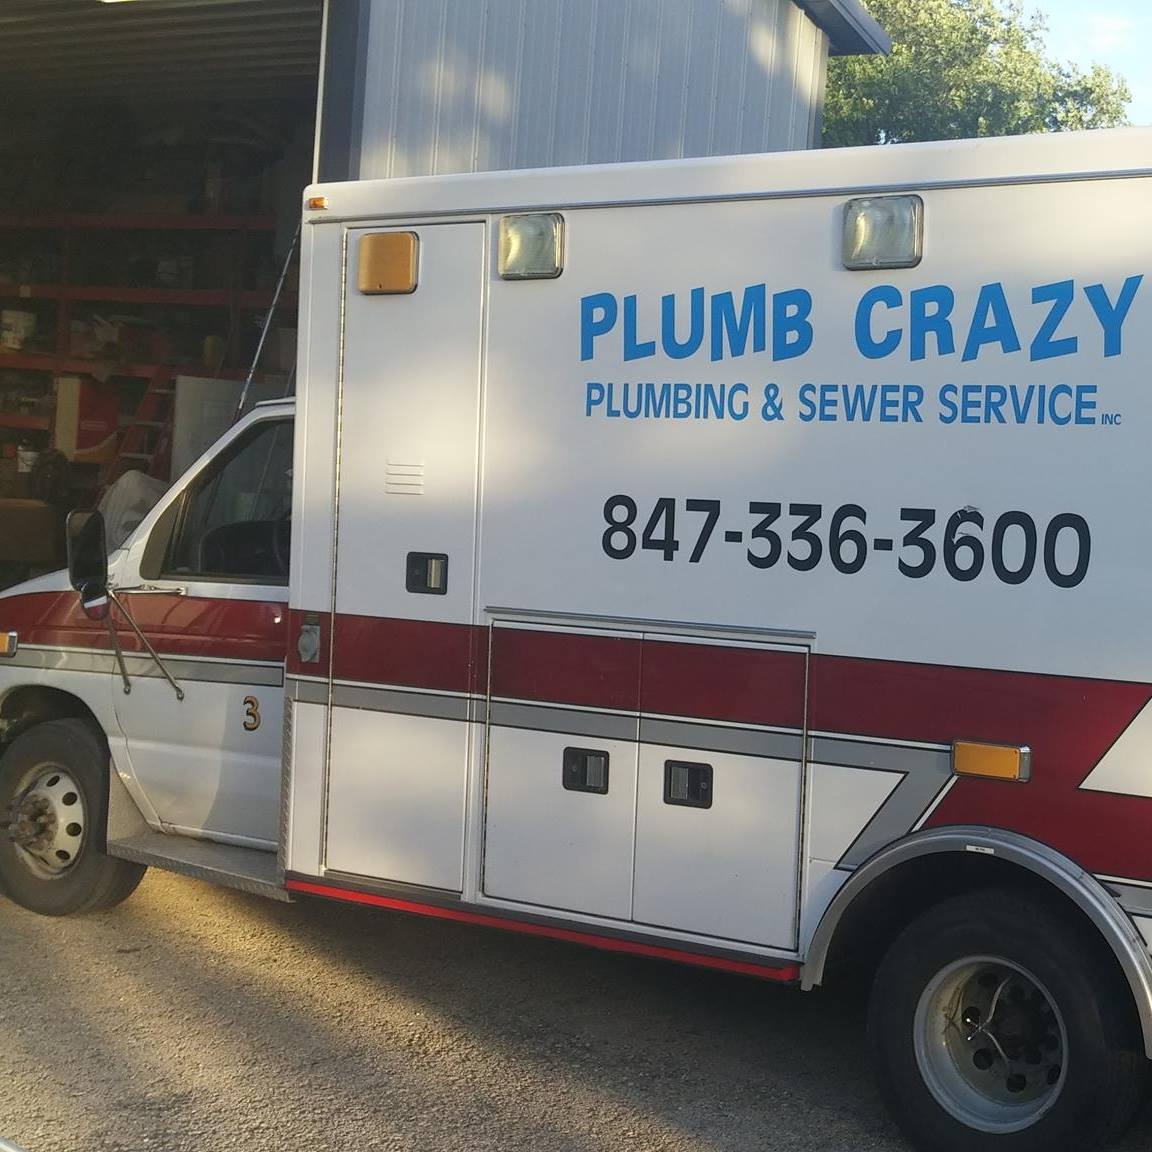 Plumb Crazy Plumbing $ Sewer Inc